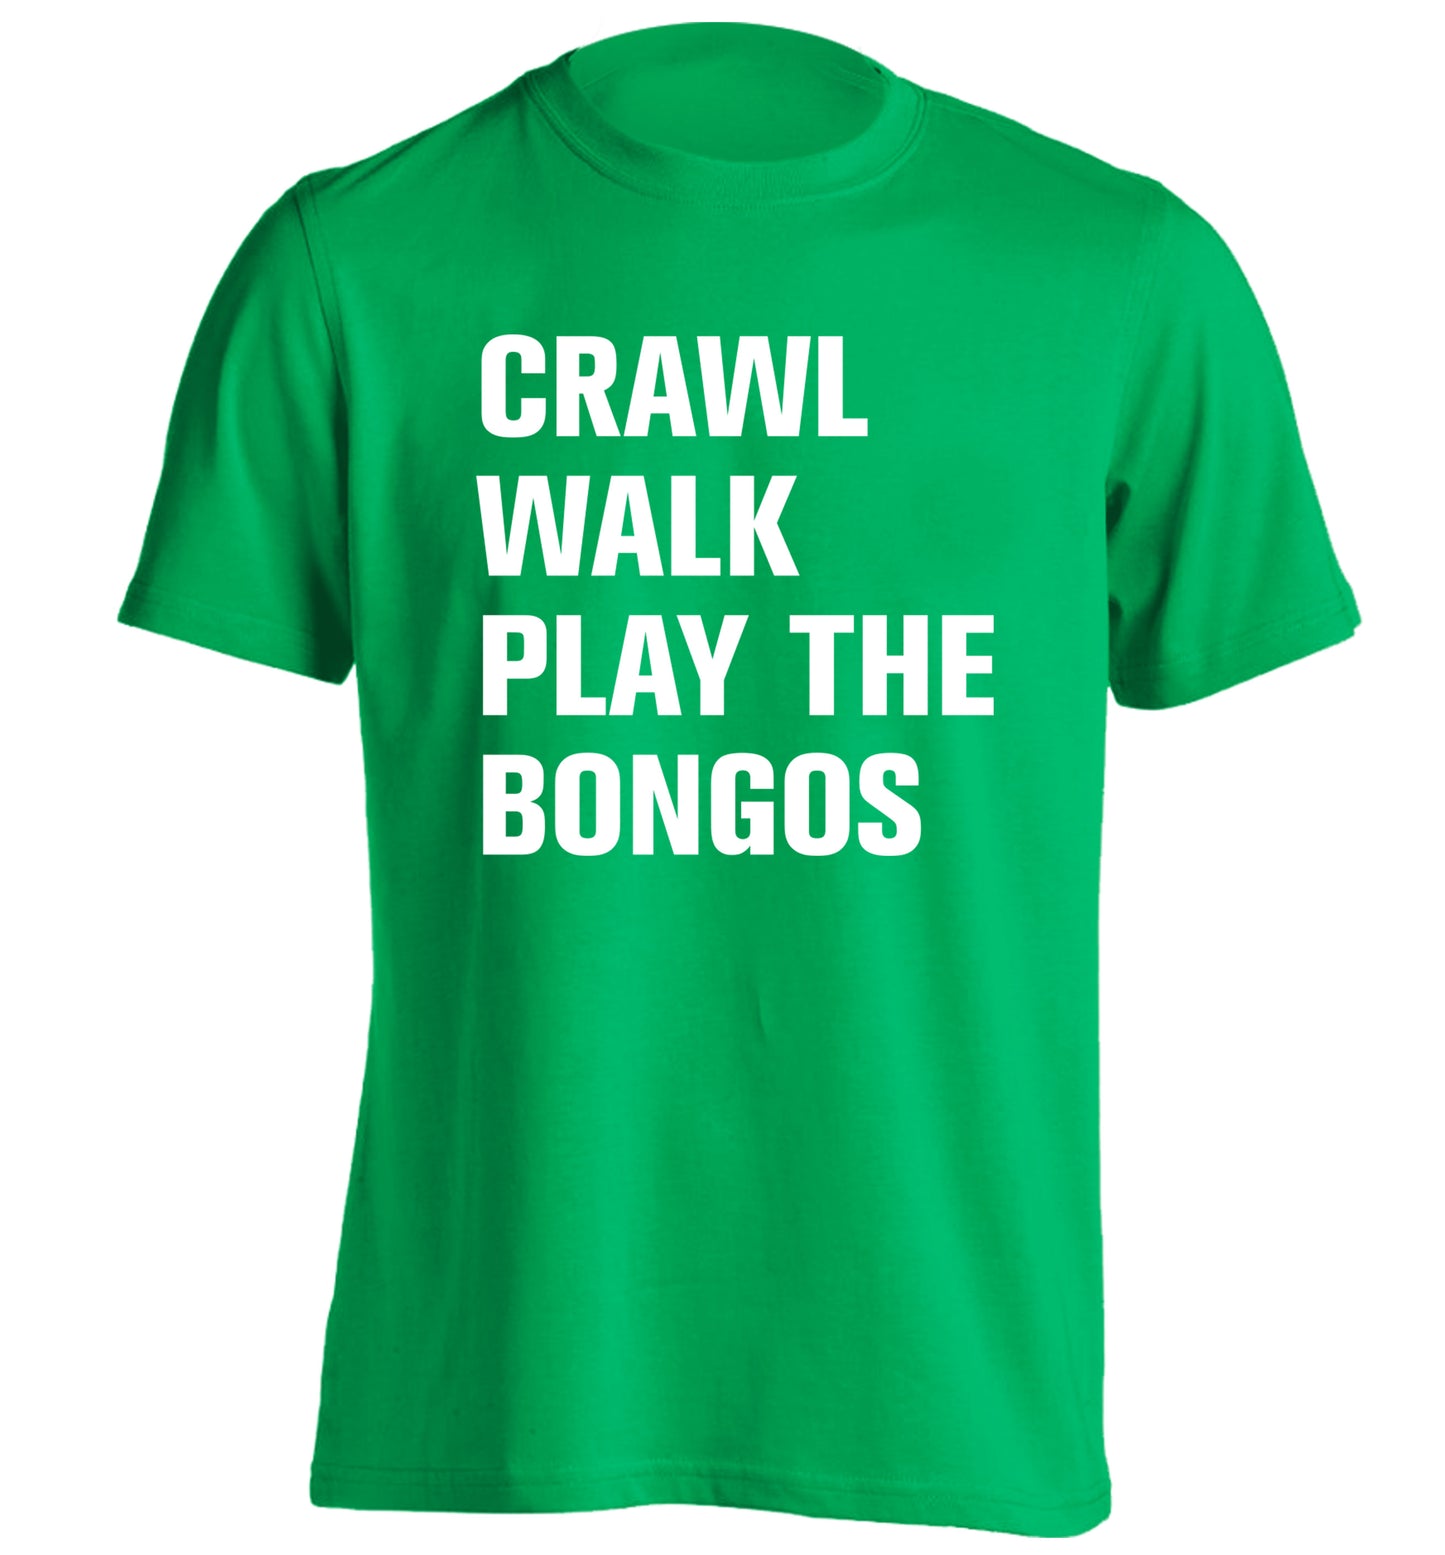 Crawl Walk Play Bongos adults unisex green Tshirt 2XL